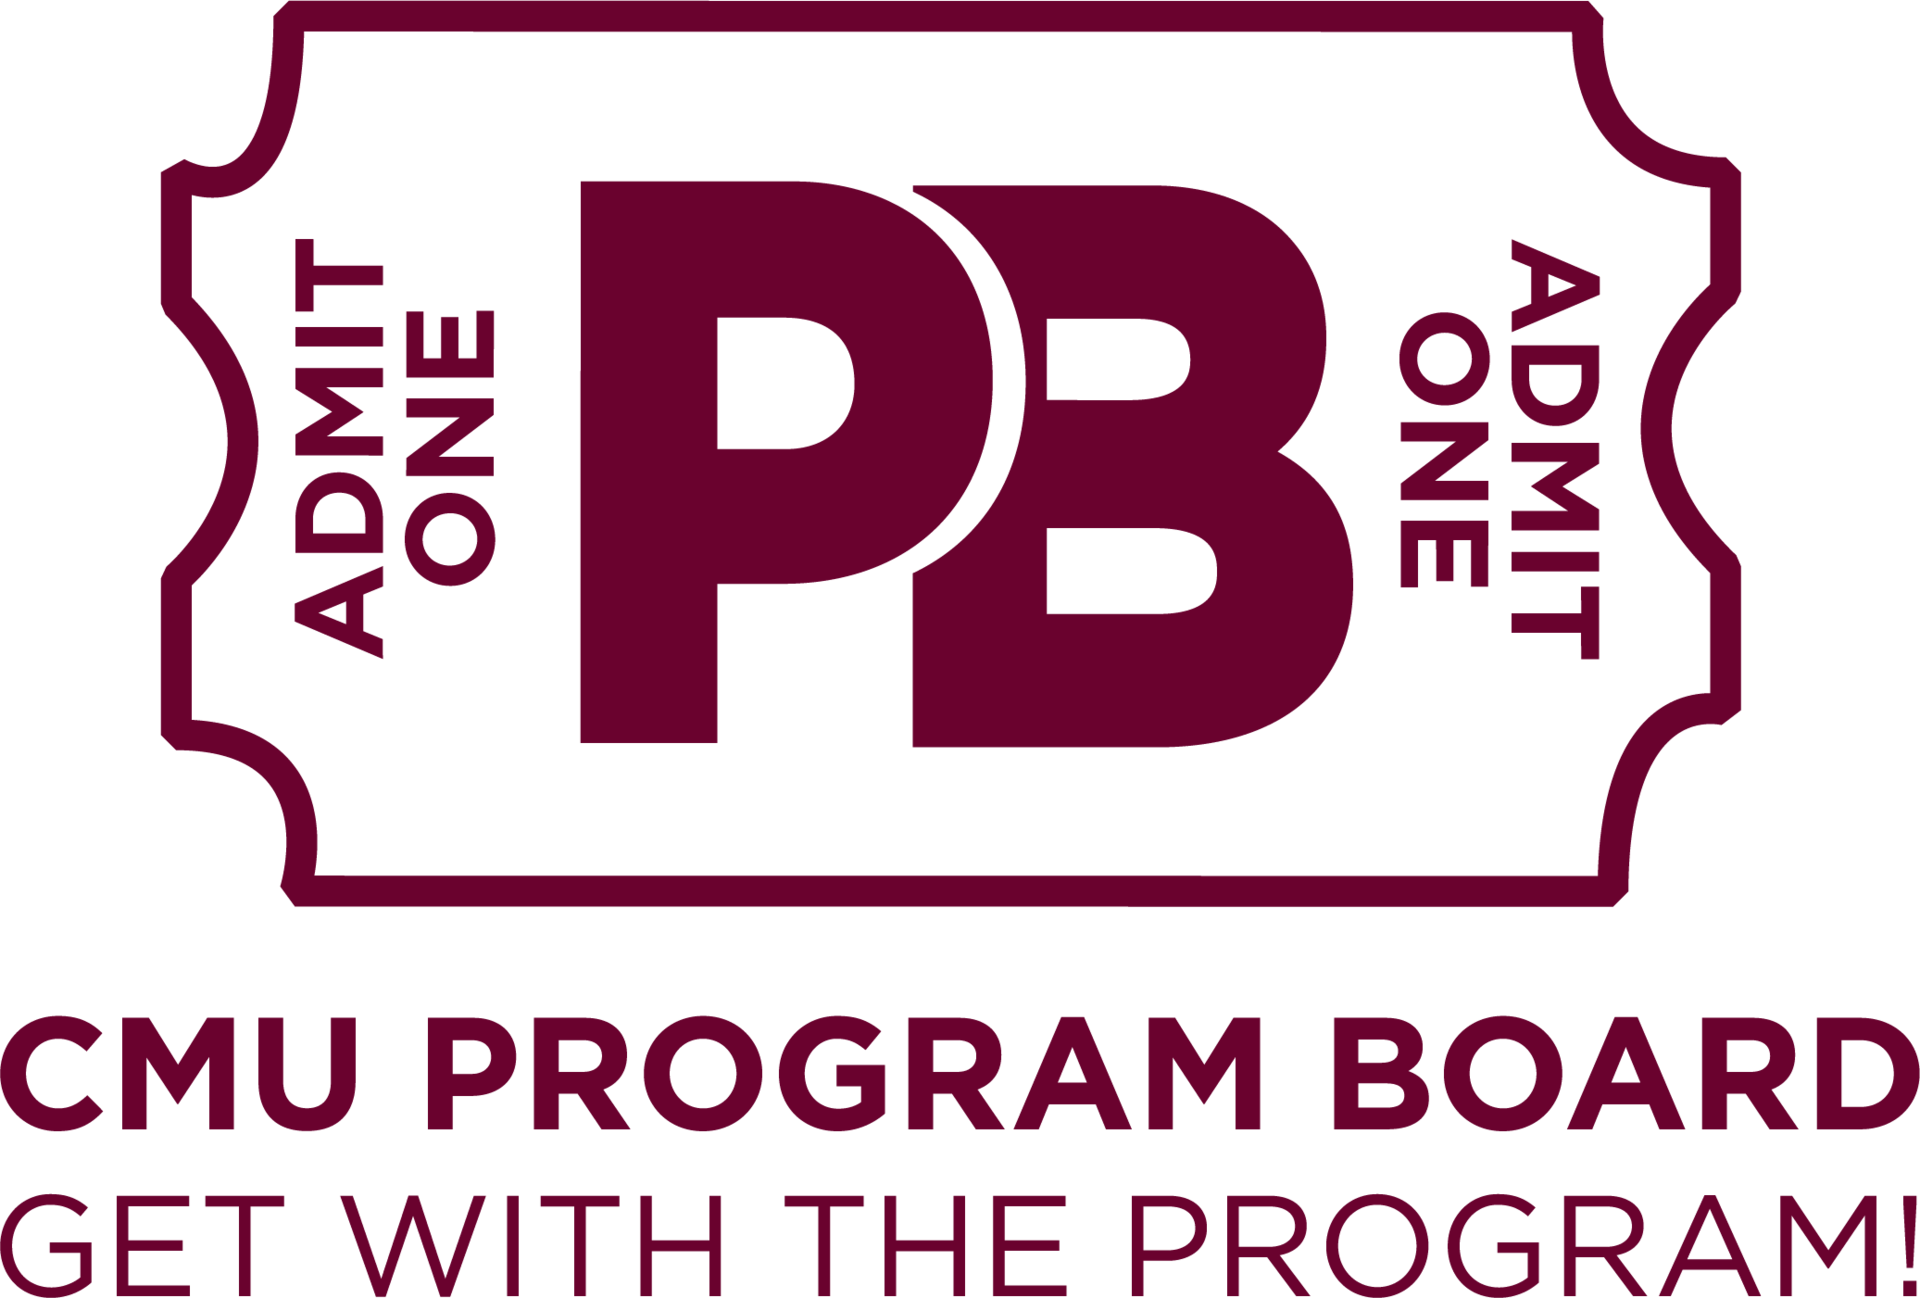 The Program Board logo.